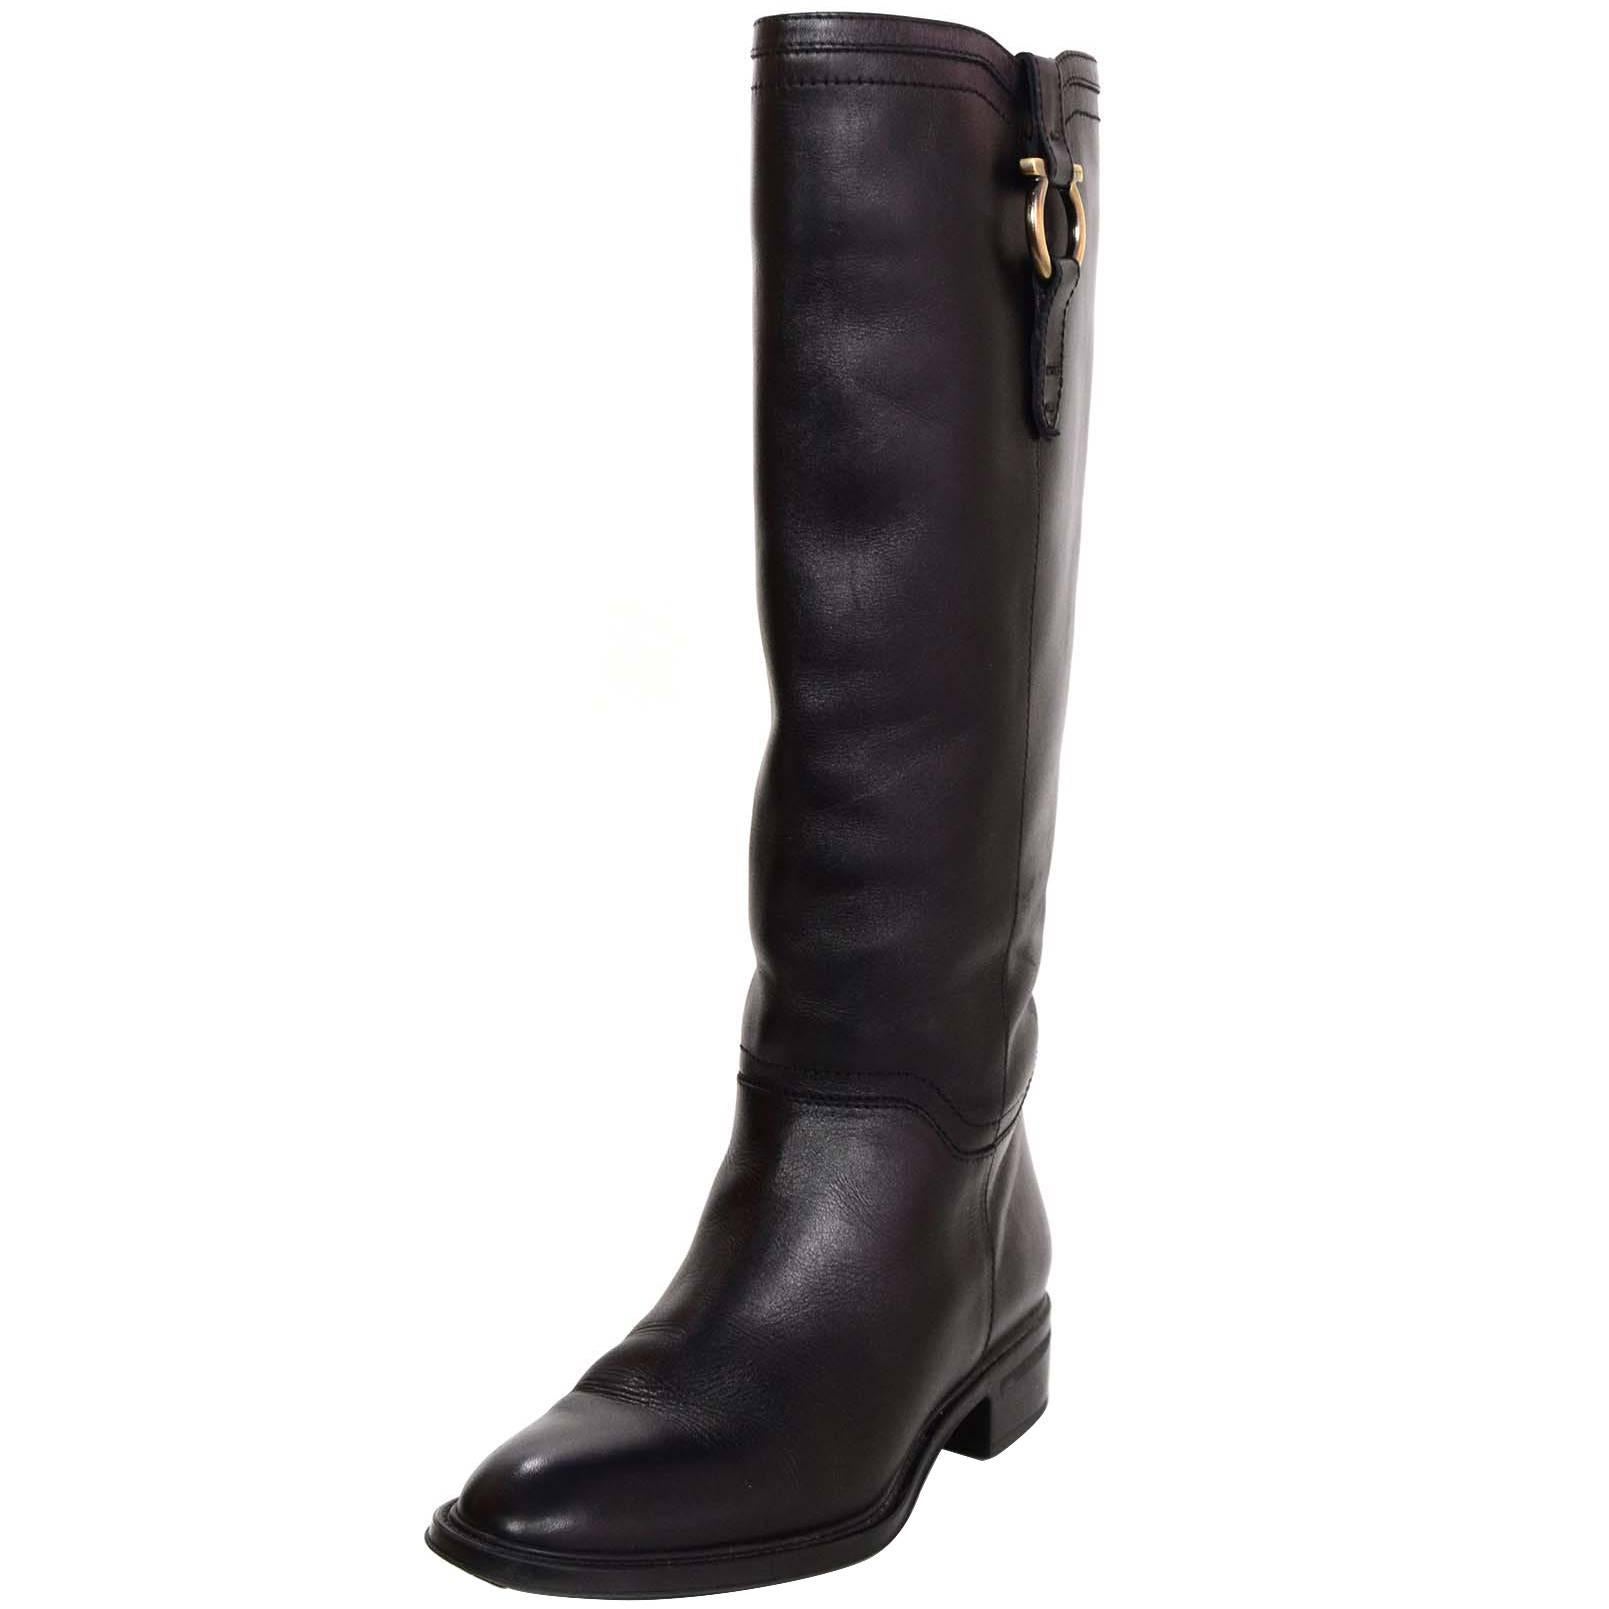 Salvatore Ferragamo Black Leather Boots Sz 5.5